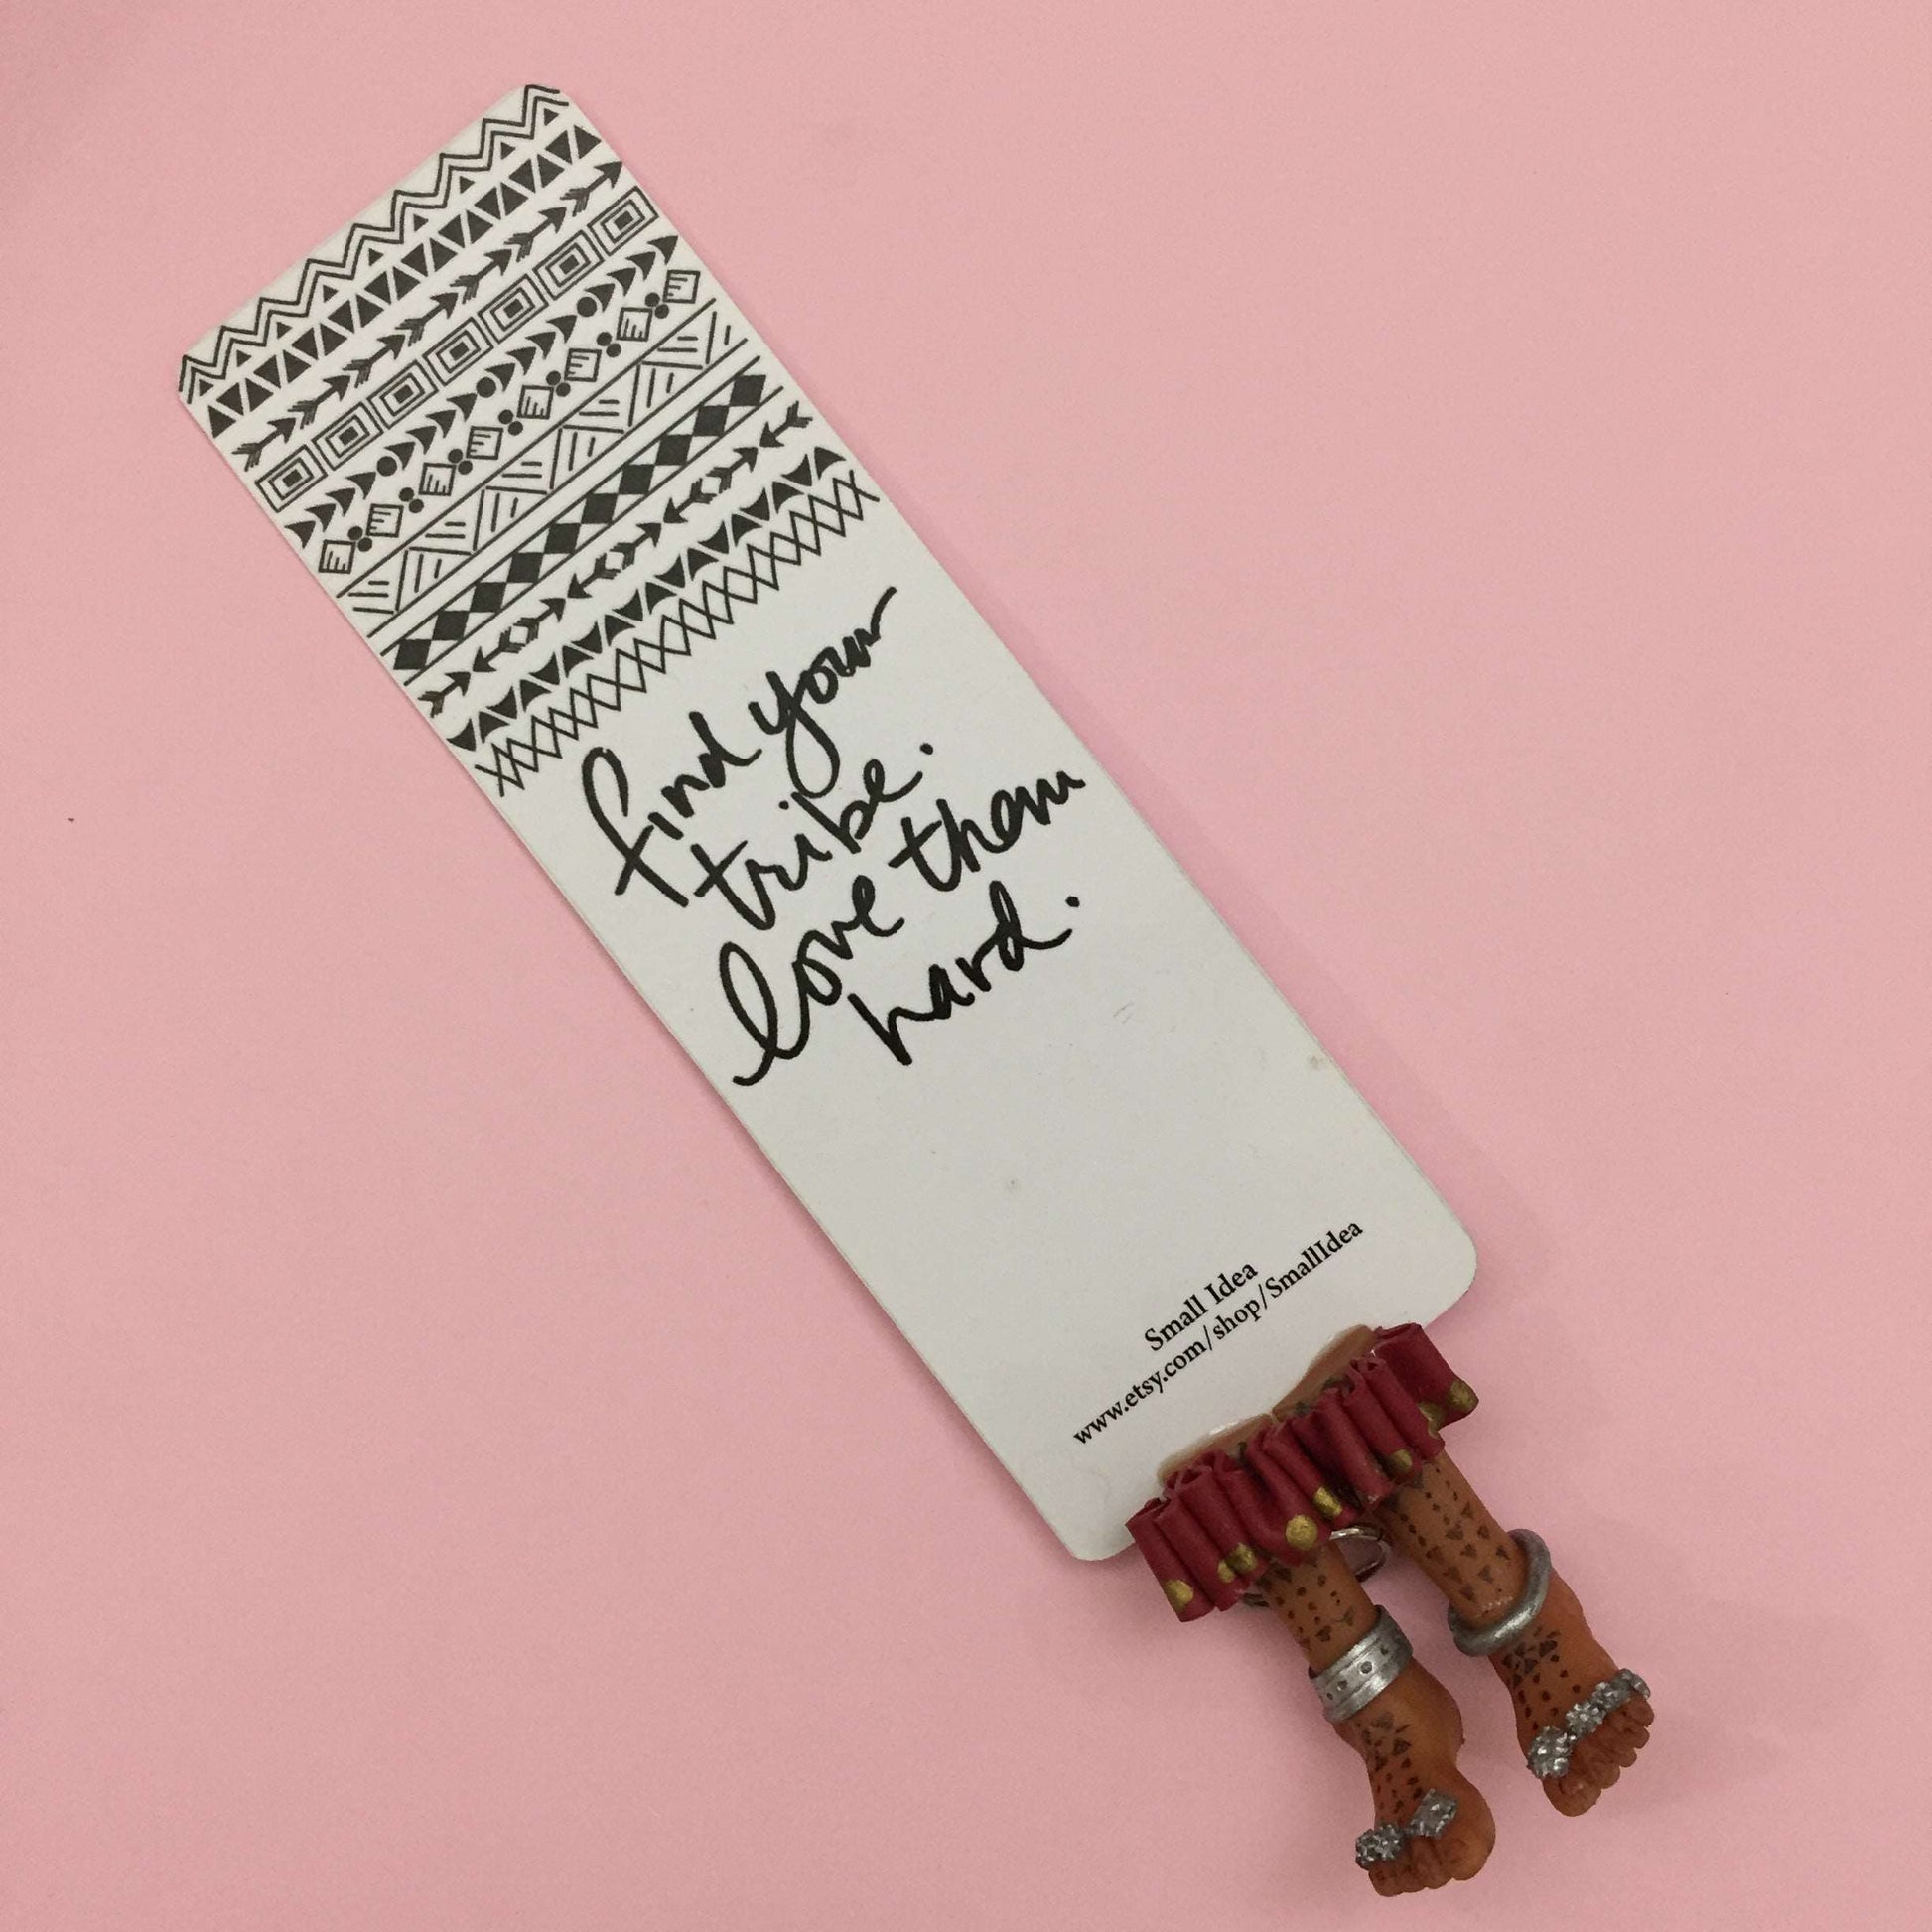 Find Your Tribe Handmade Miniature Leggy Bookmark